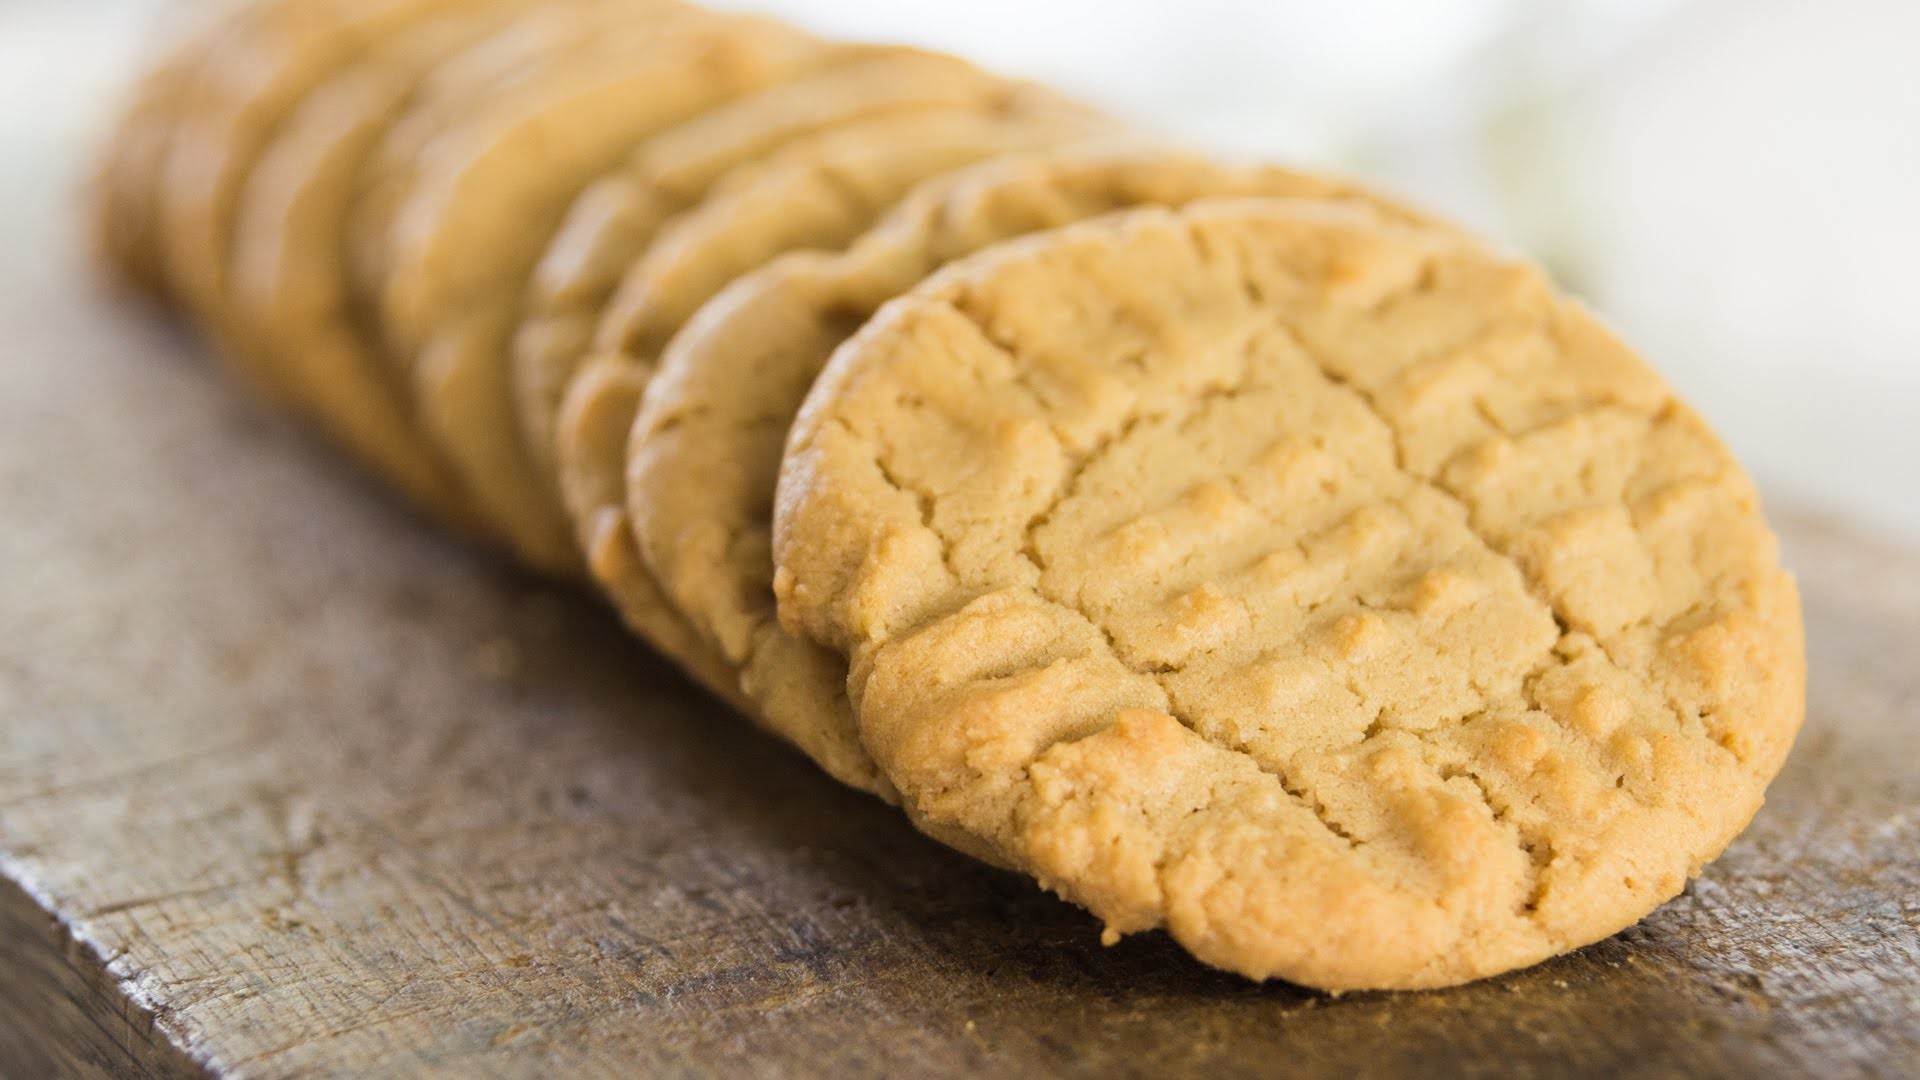 Change cookie. Cookie Peanut Butter. Замороженное печенье кукис. Печенье кукис идеи. Печенье Даниса баттер кукис.